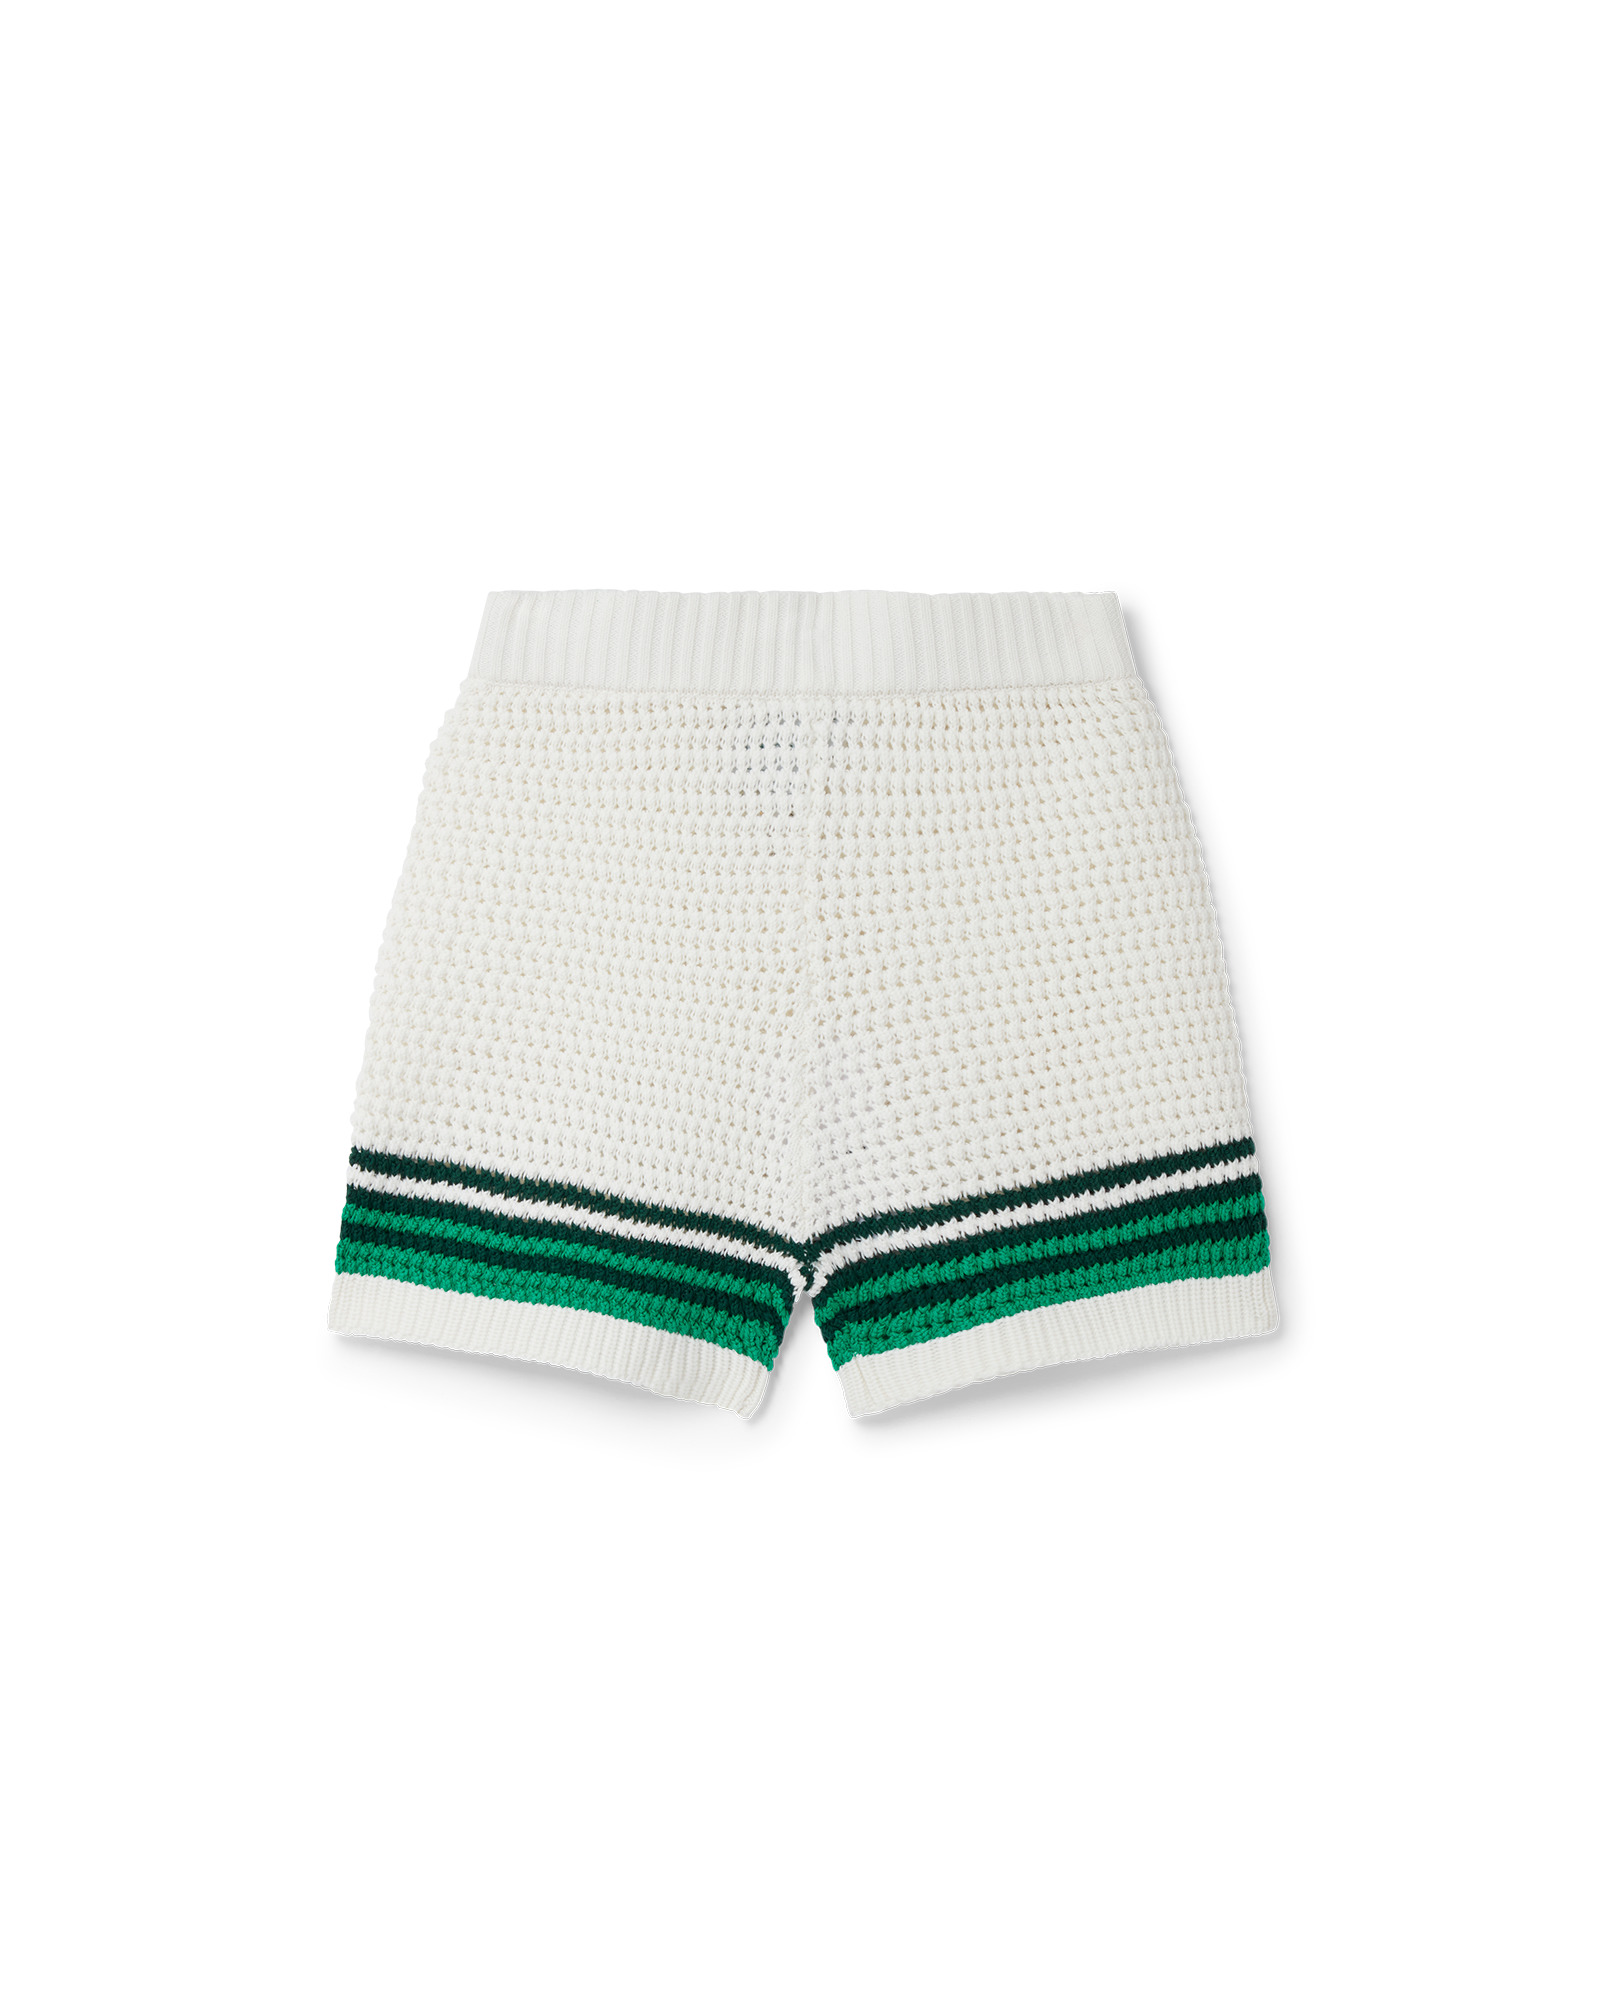 Tennis Crochet Shorts - 1